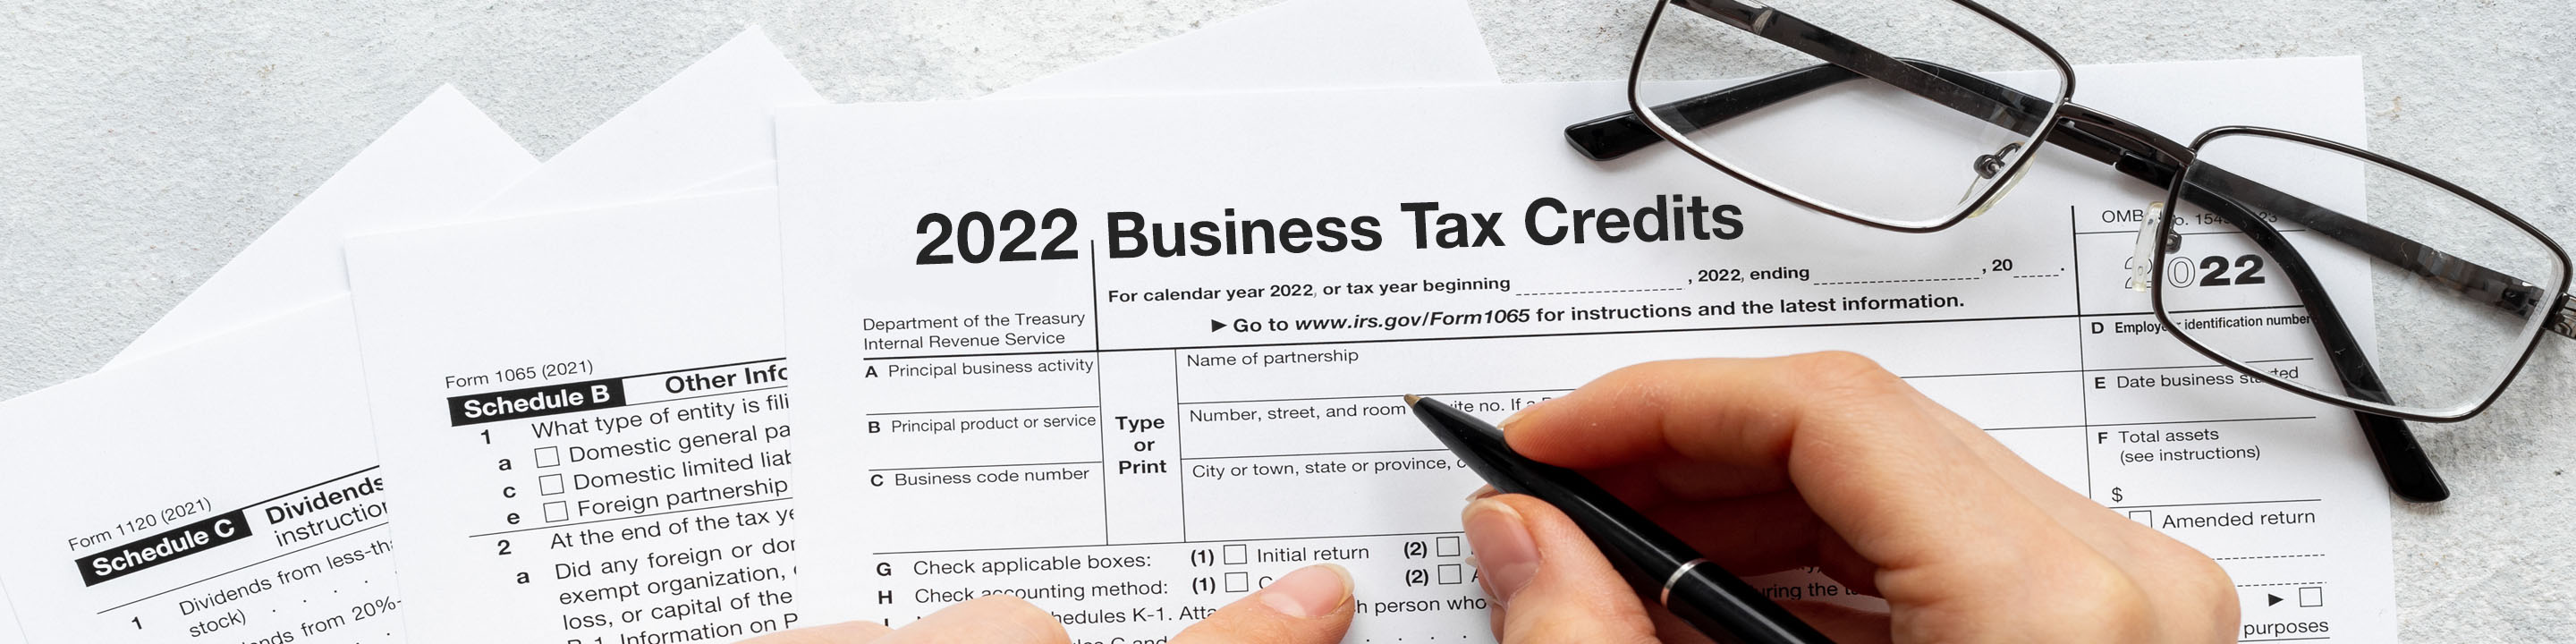 Business Tax Credits 2022